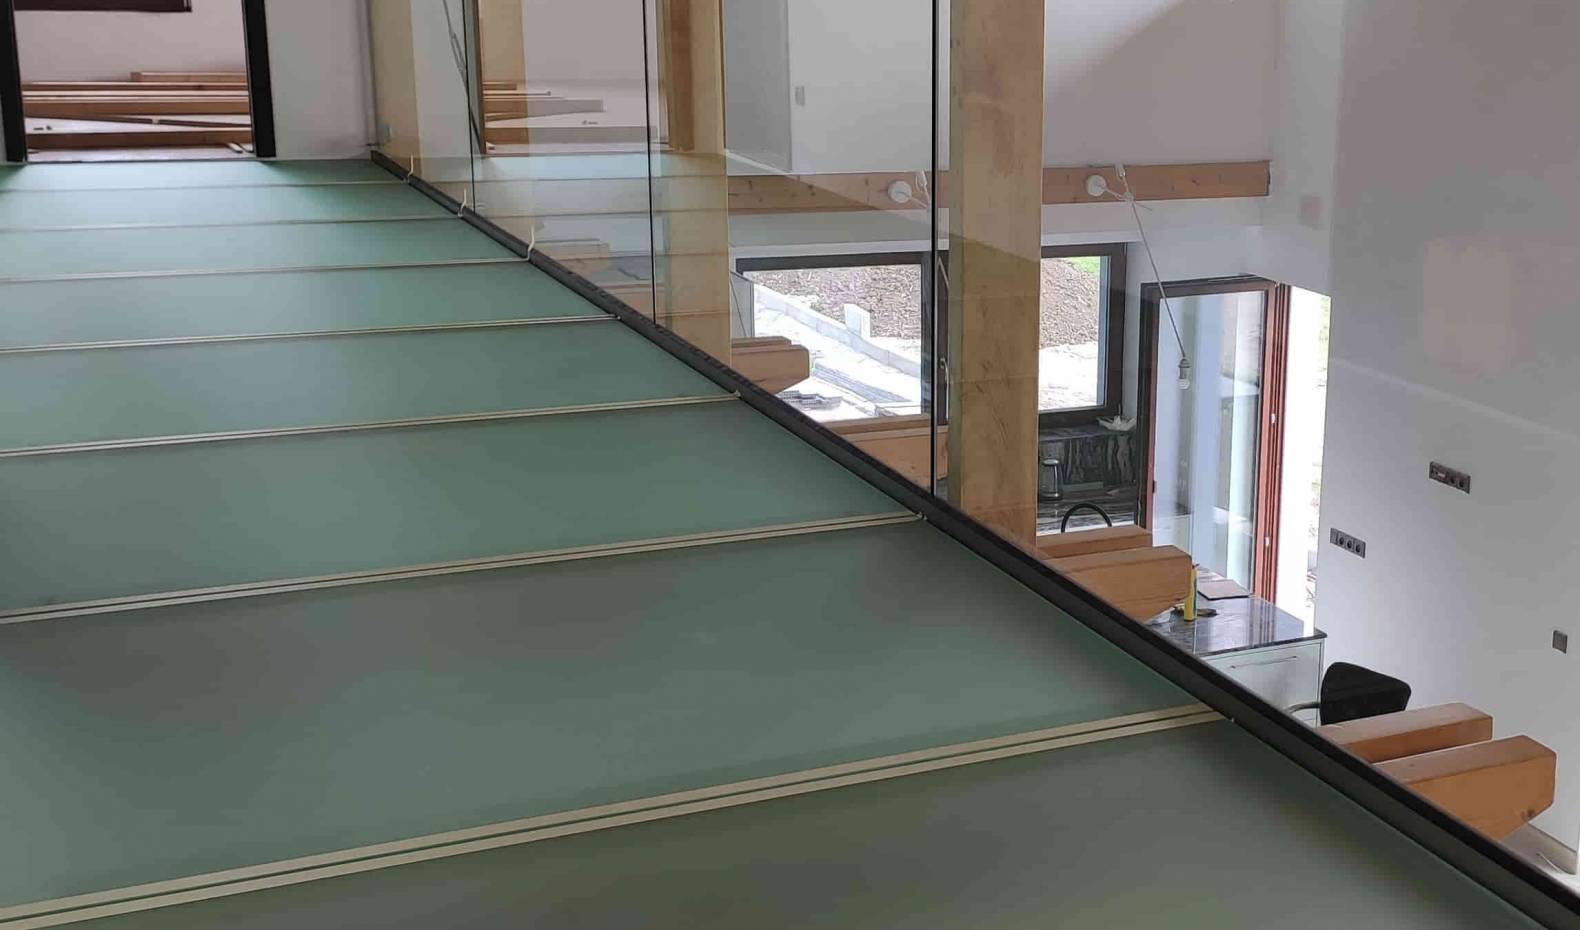  glass railings and glass floors